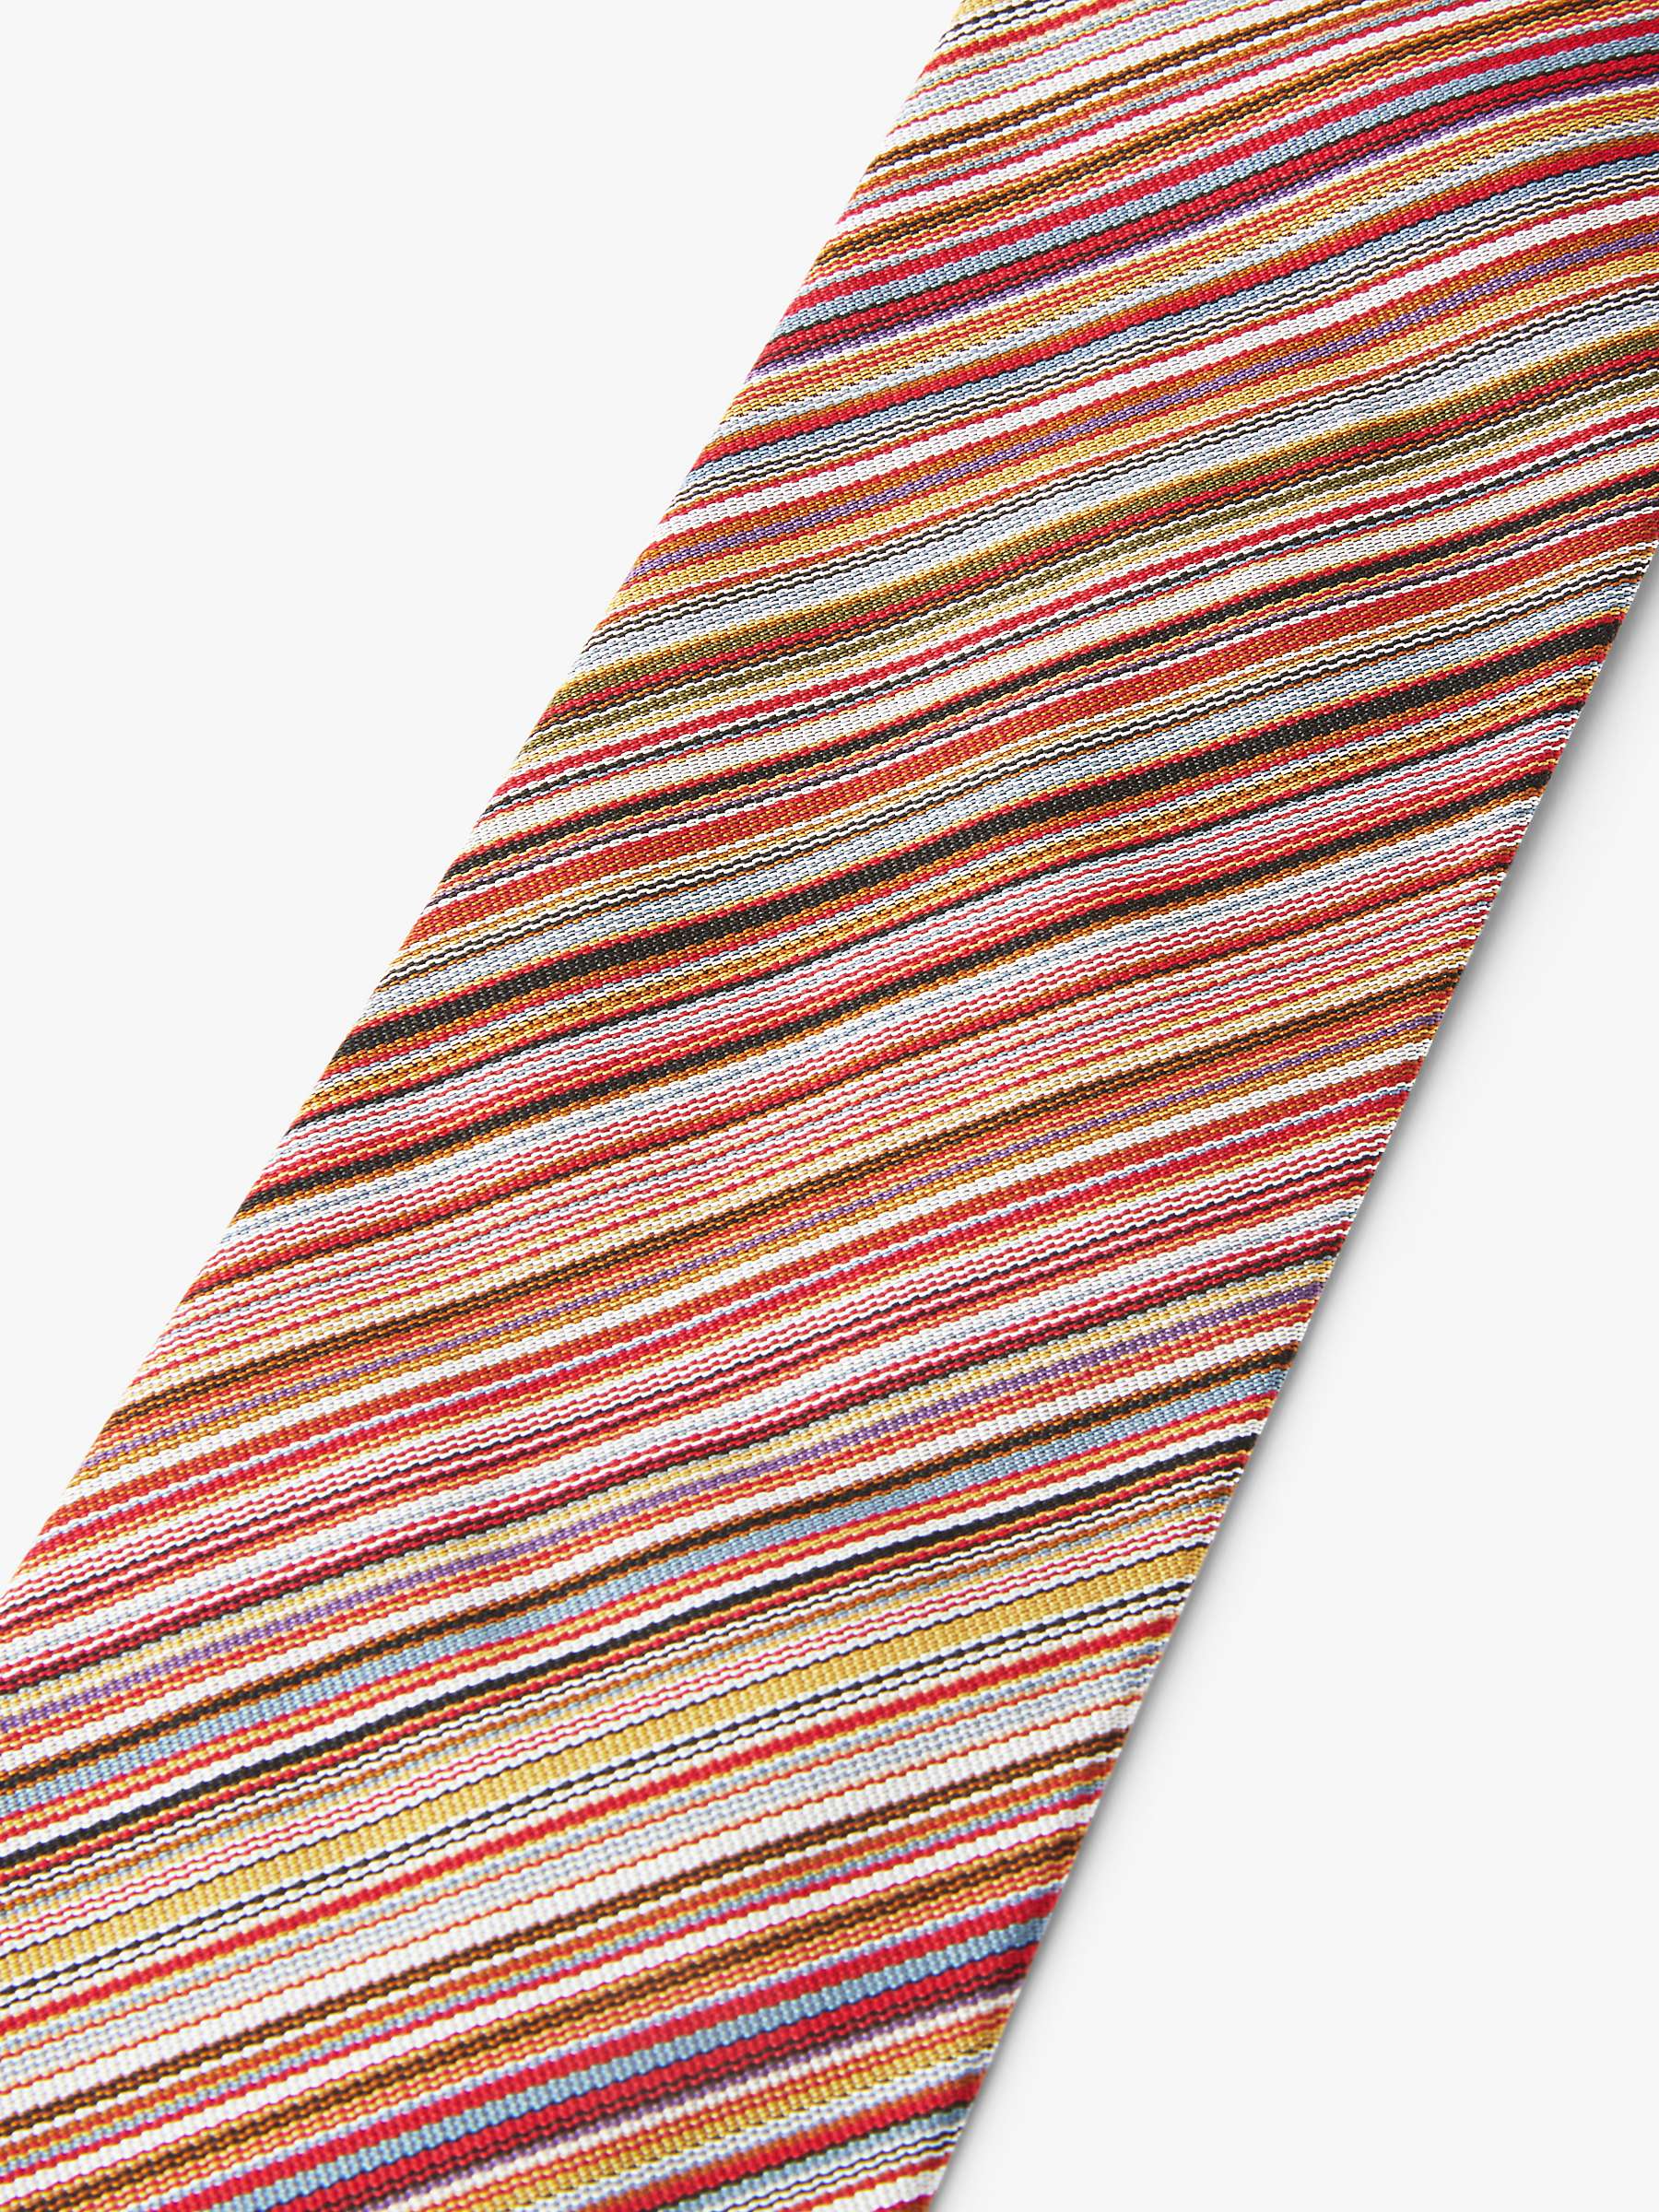 Paul Smith Classic Stripe Silk Tie, Multi at John Lewis & Partners